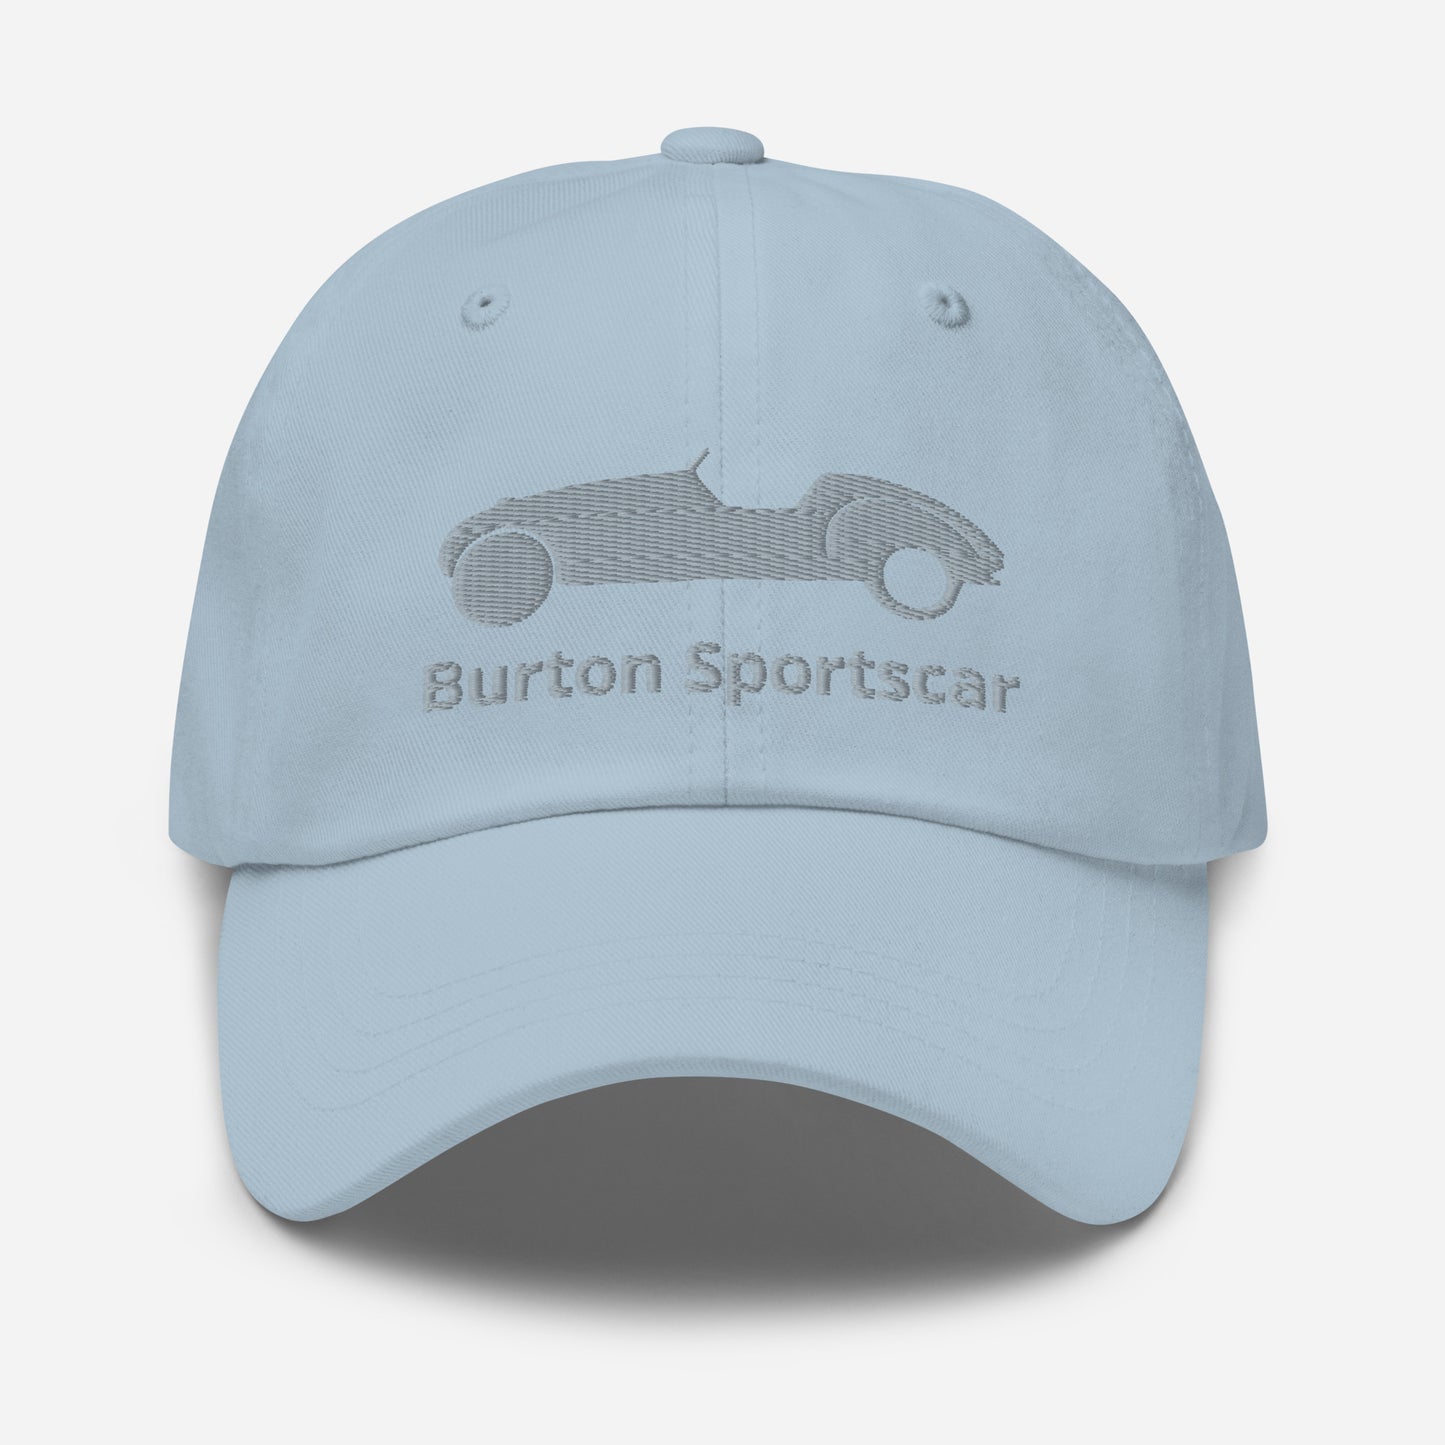 Geborduurde Burton Sportscar pet - Zwart, Navy, Rood, Grijs, L.Blauw of Wit